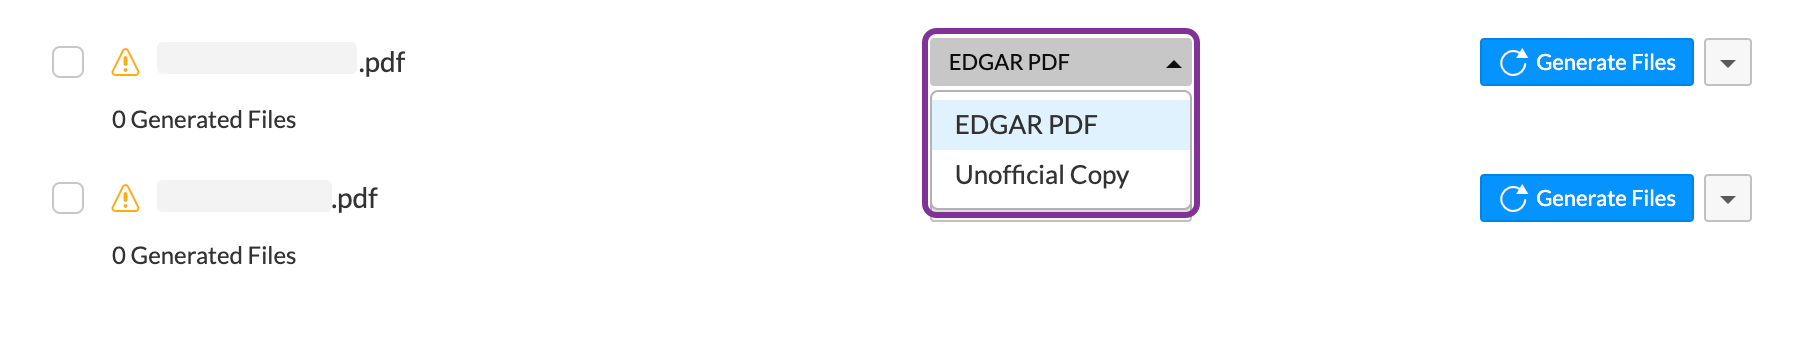 Seleccionar un PDF de EDGAR